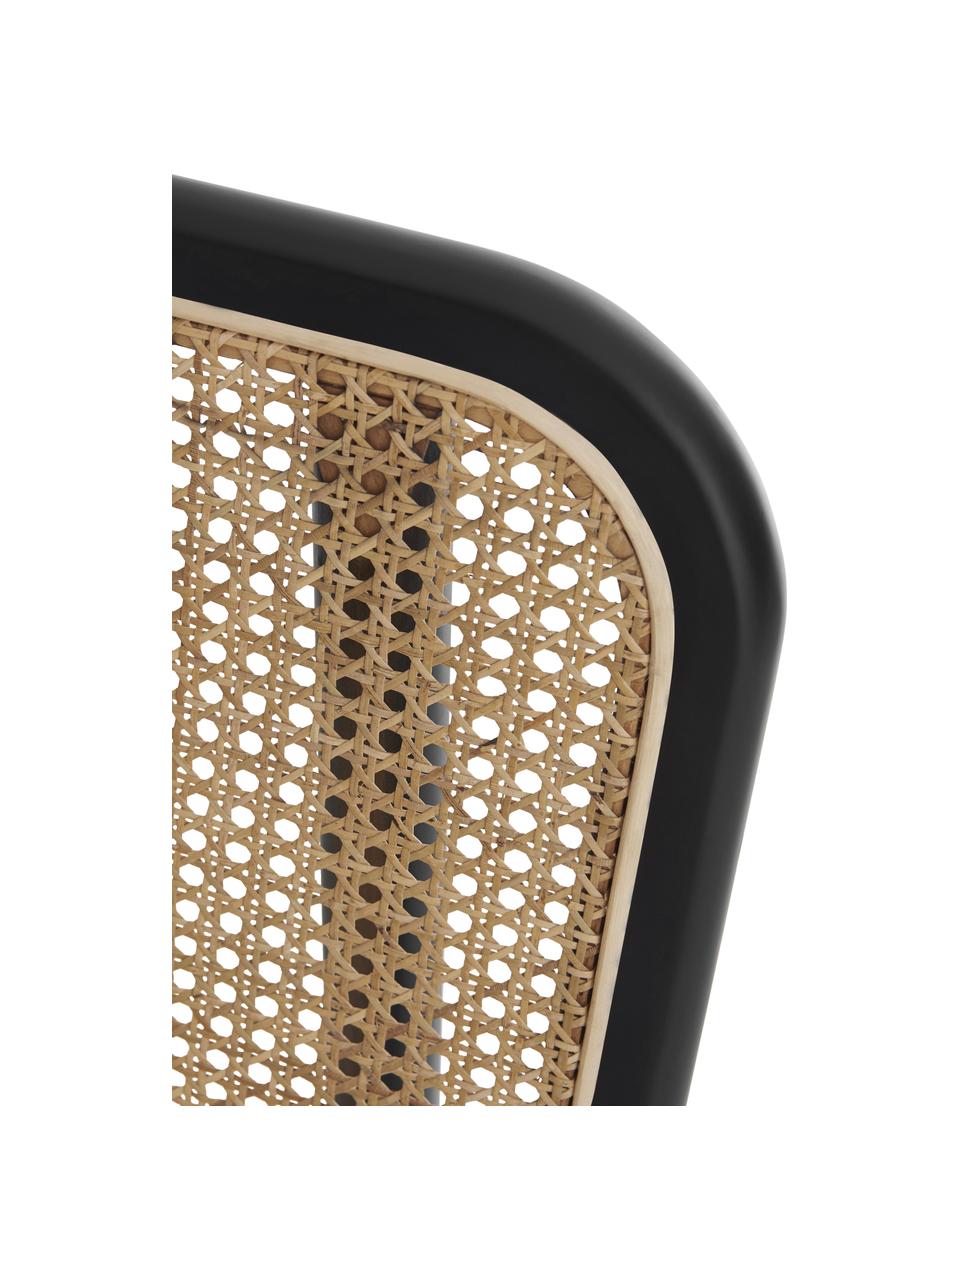 Lounge fauteuil Callo van rotan in zwart, Frame: beukenhout gelakt, FSC-ge, Geweven stof crèmewit, beukenhout zwart gelakt, B 106 cm x D 79 cm